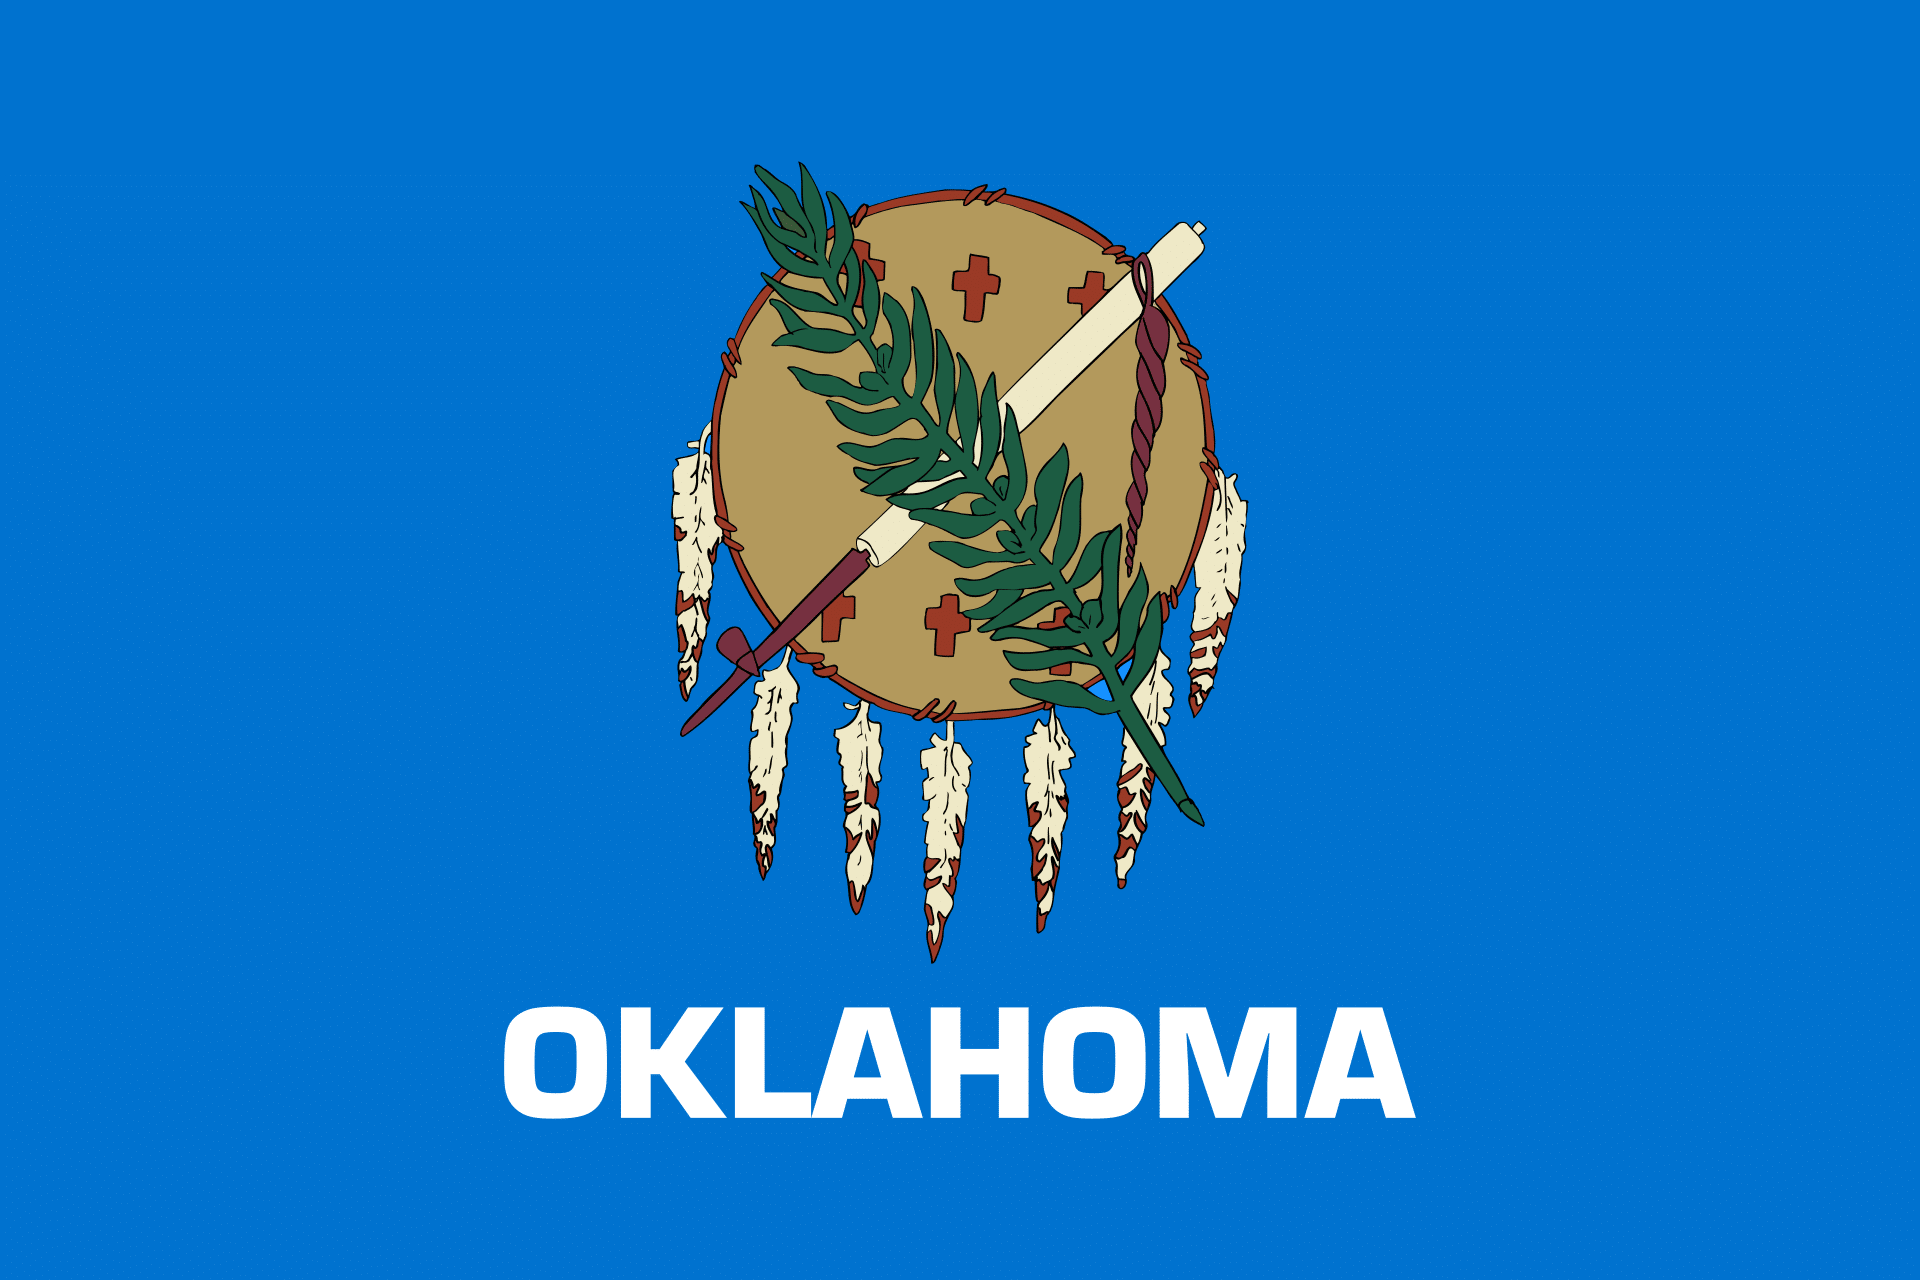 Oklahoma's state flag Welcome